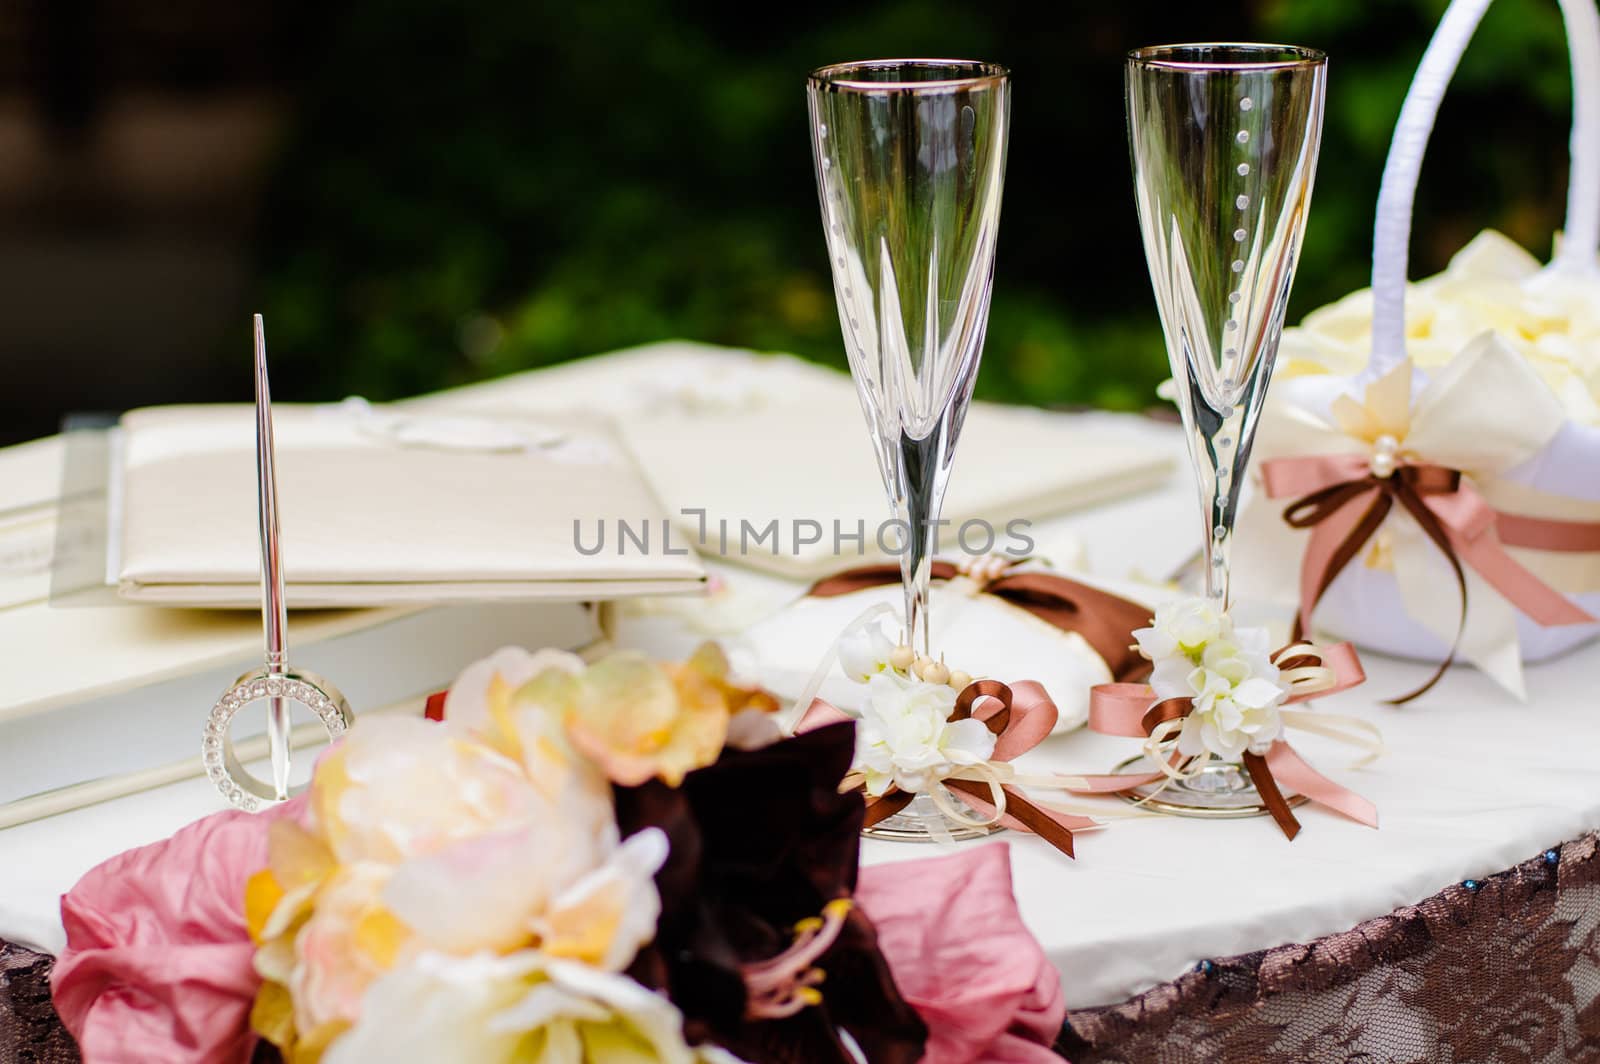 Wedding wineglasses by nvelichko